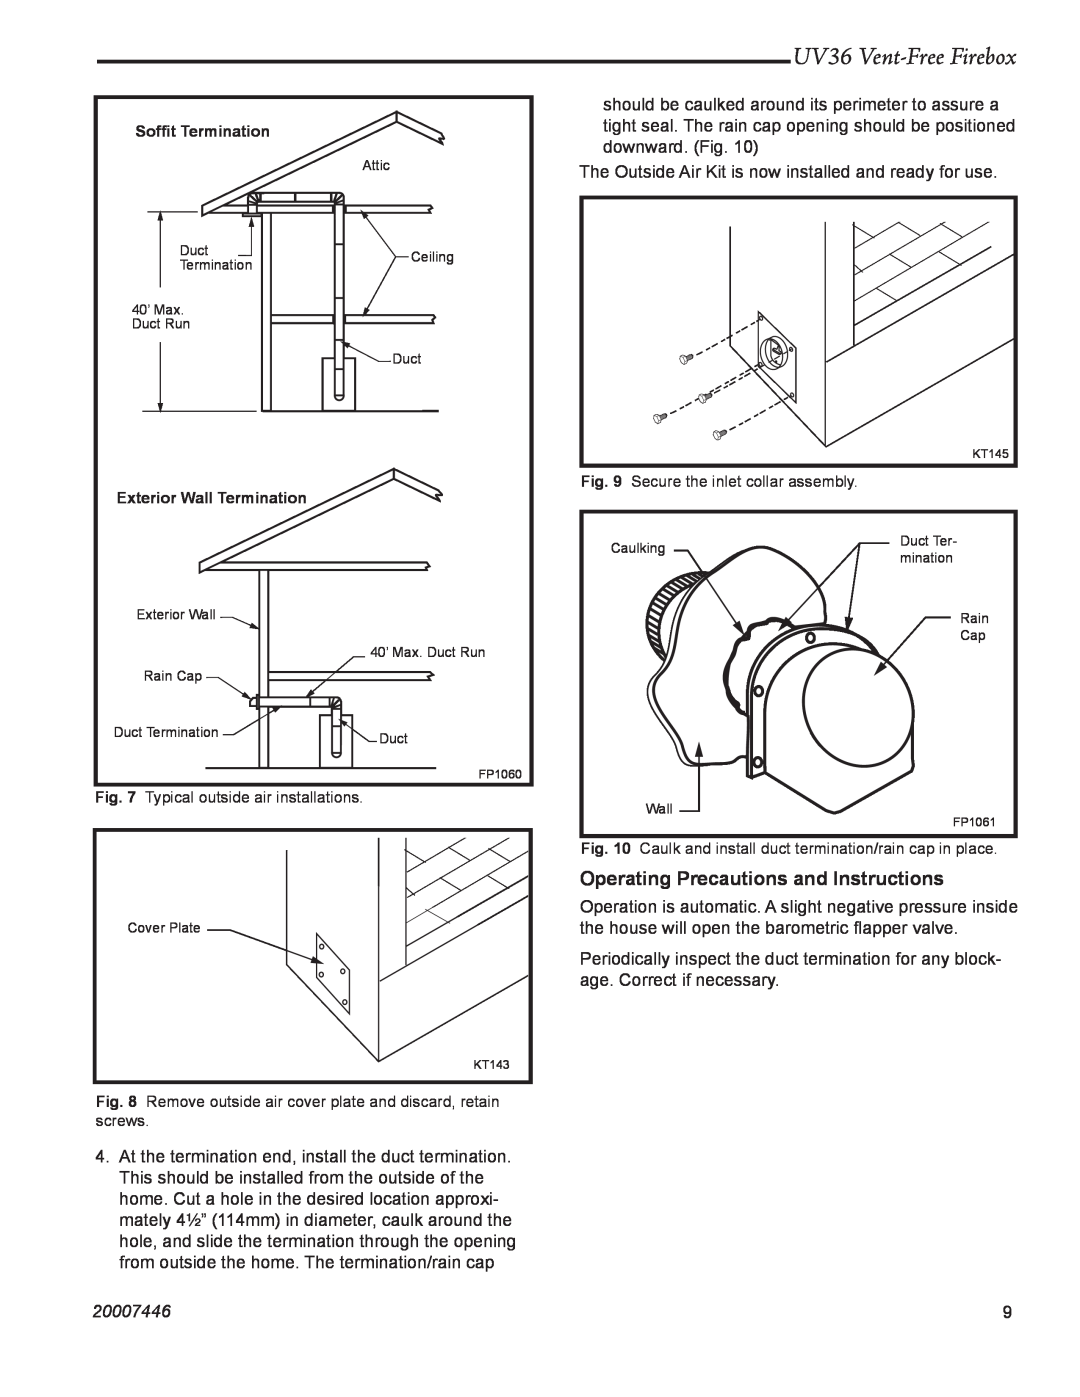 Majestic Appliances Operating Precautions and Instructions, UV36 Vent-FreeFirebox, 20007446, Sofﬁt Termination 